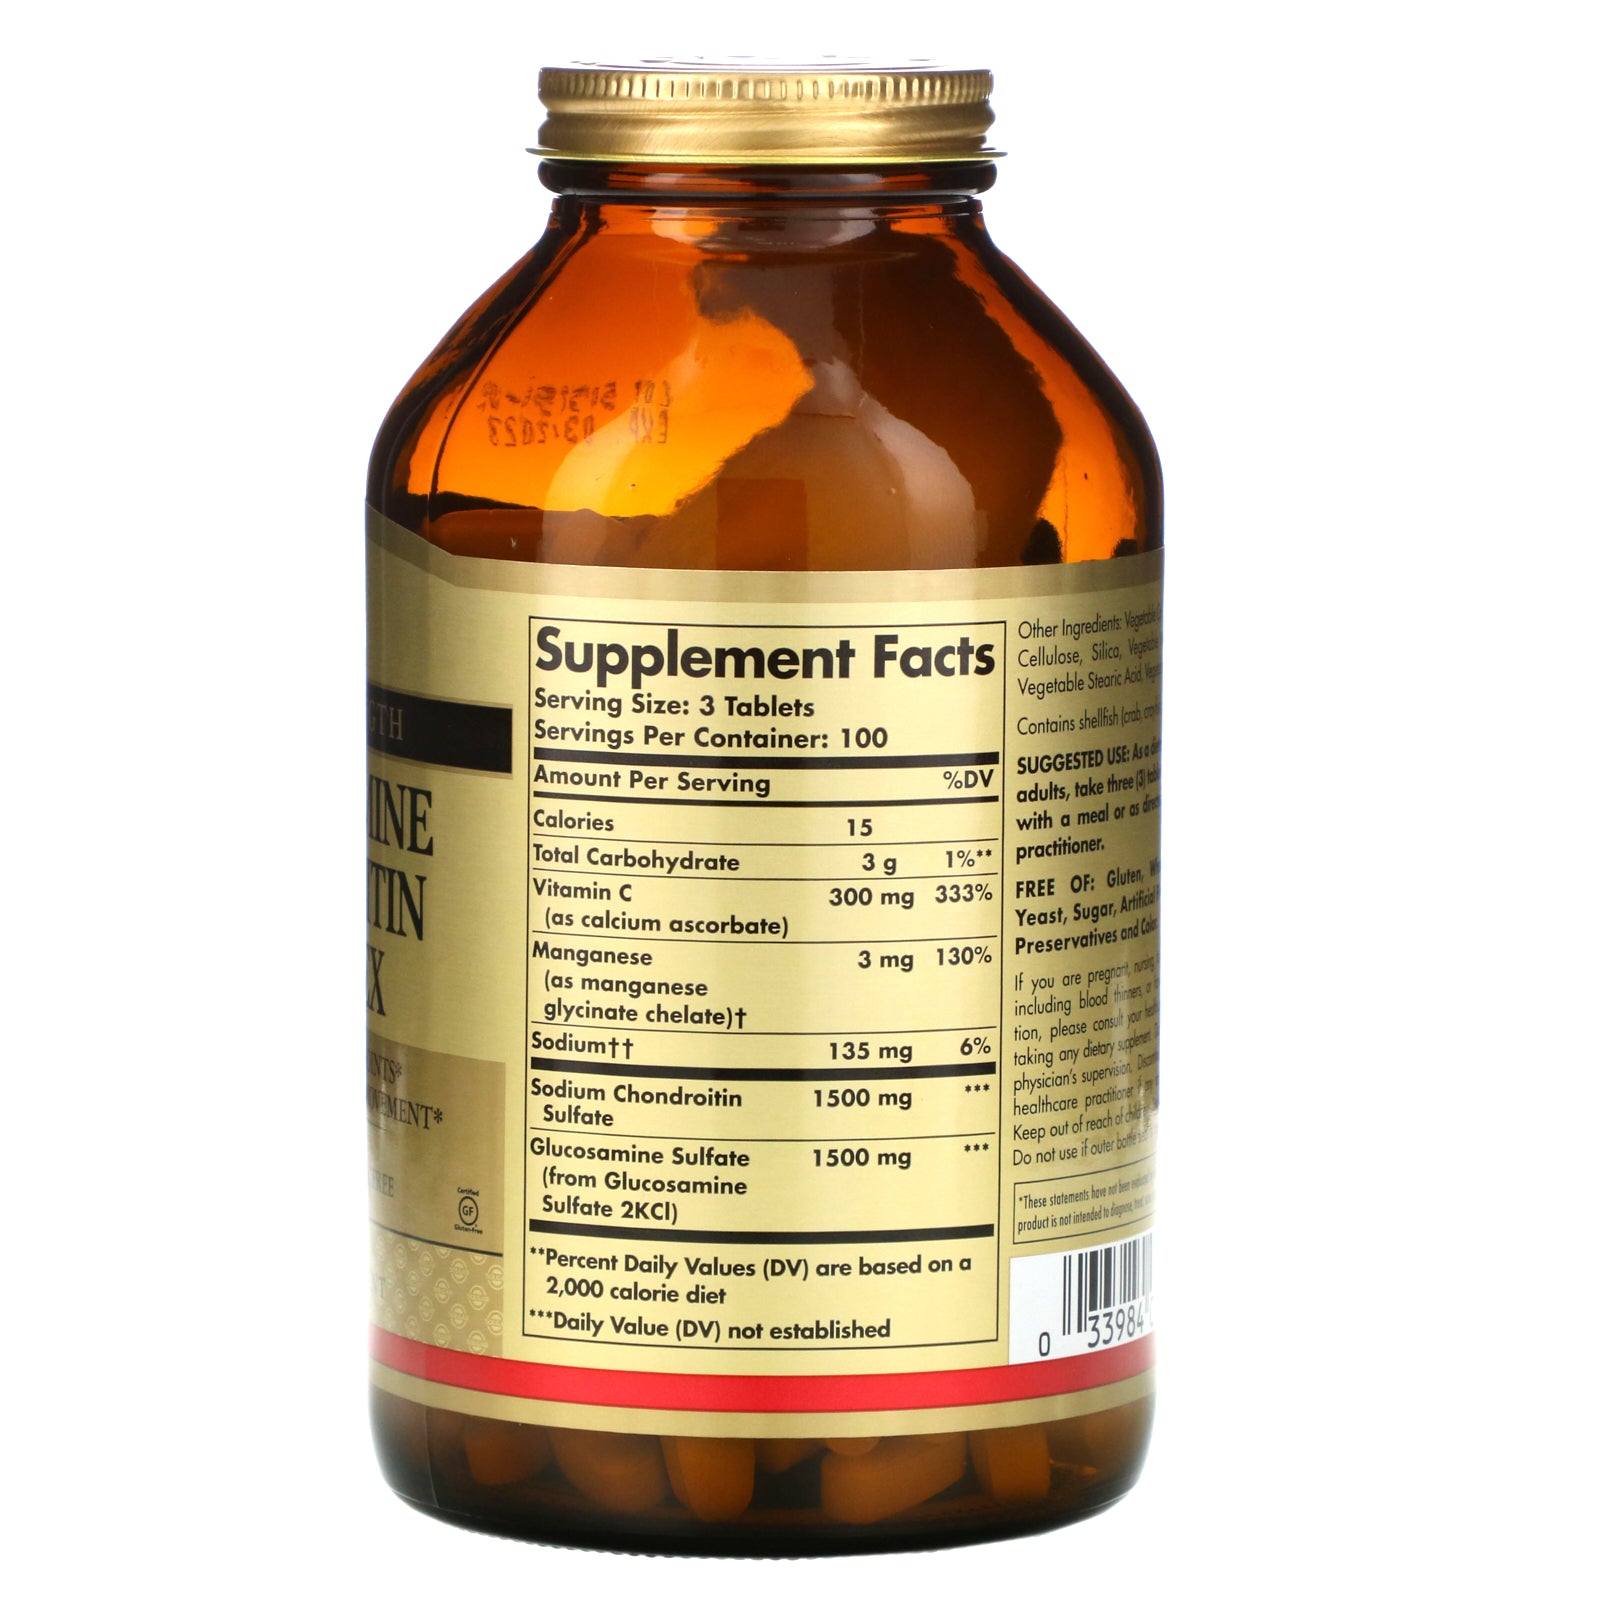 Solgar, Glucosamine Chondroitin Complex, Extra Strength, 300 Tablets